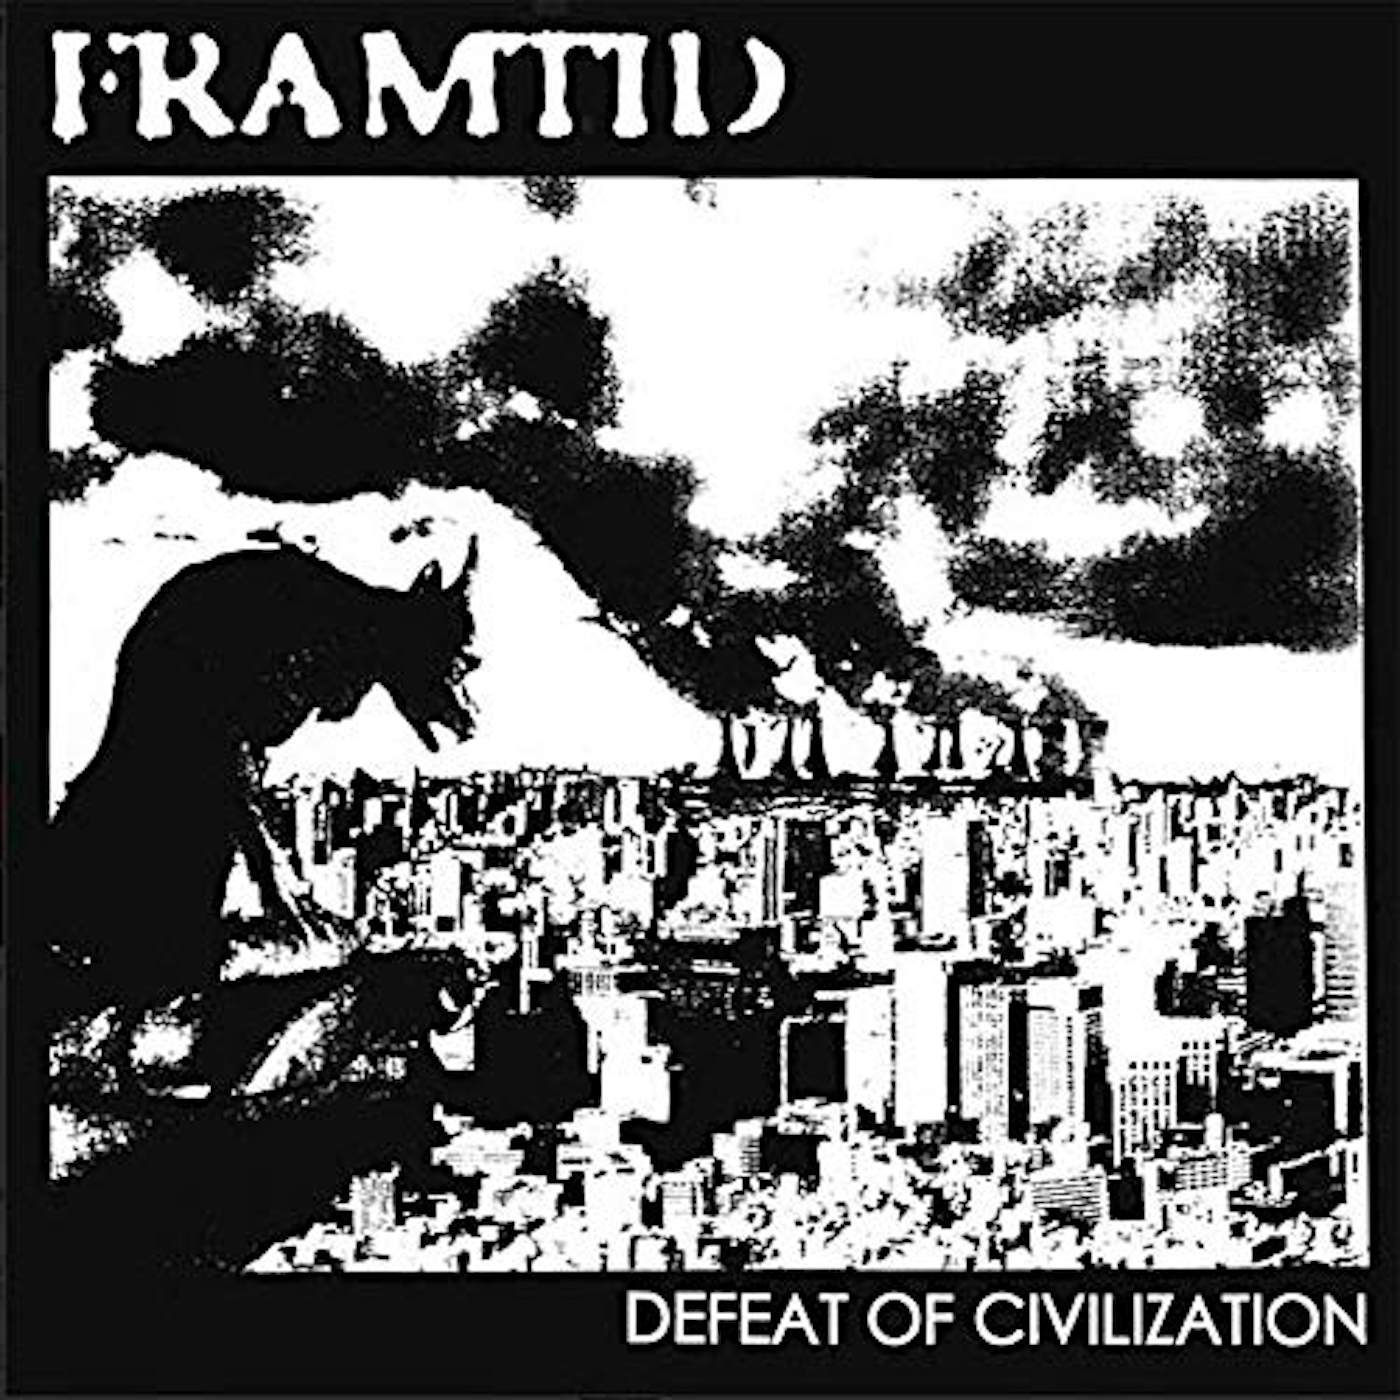 Framtid Defeat Of Civilization Vinyl Record